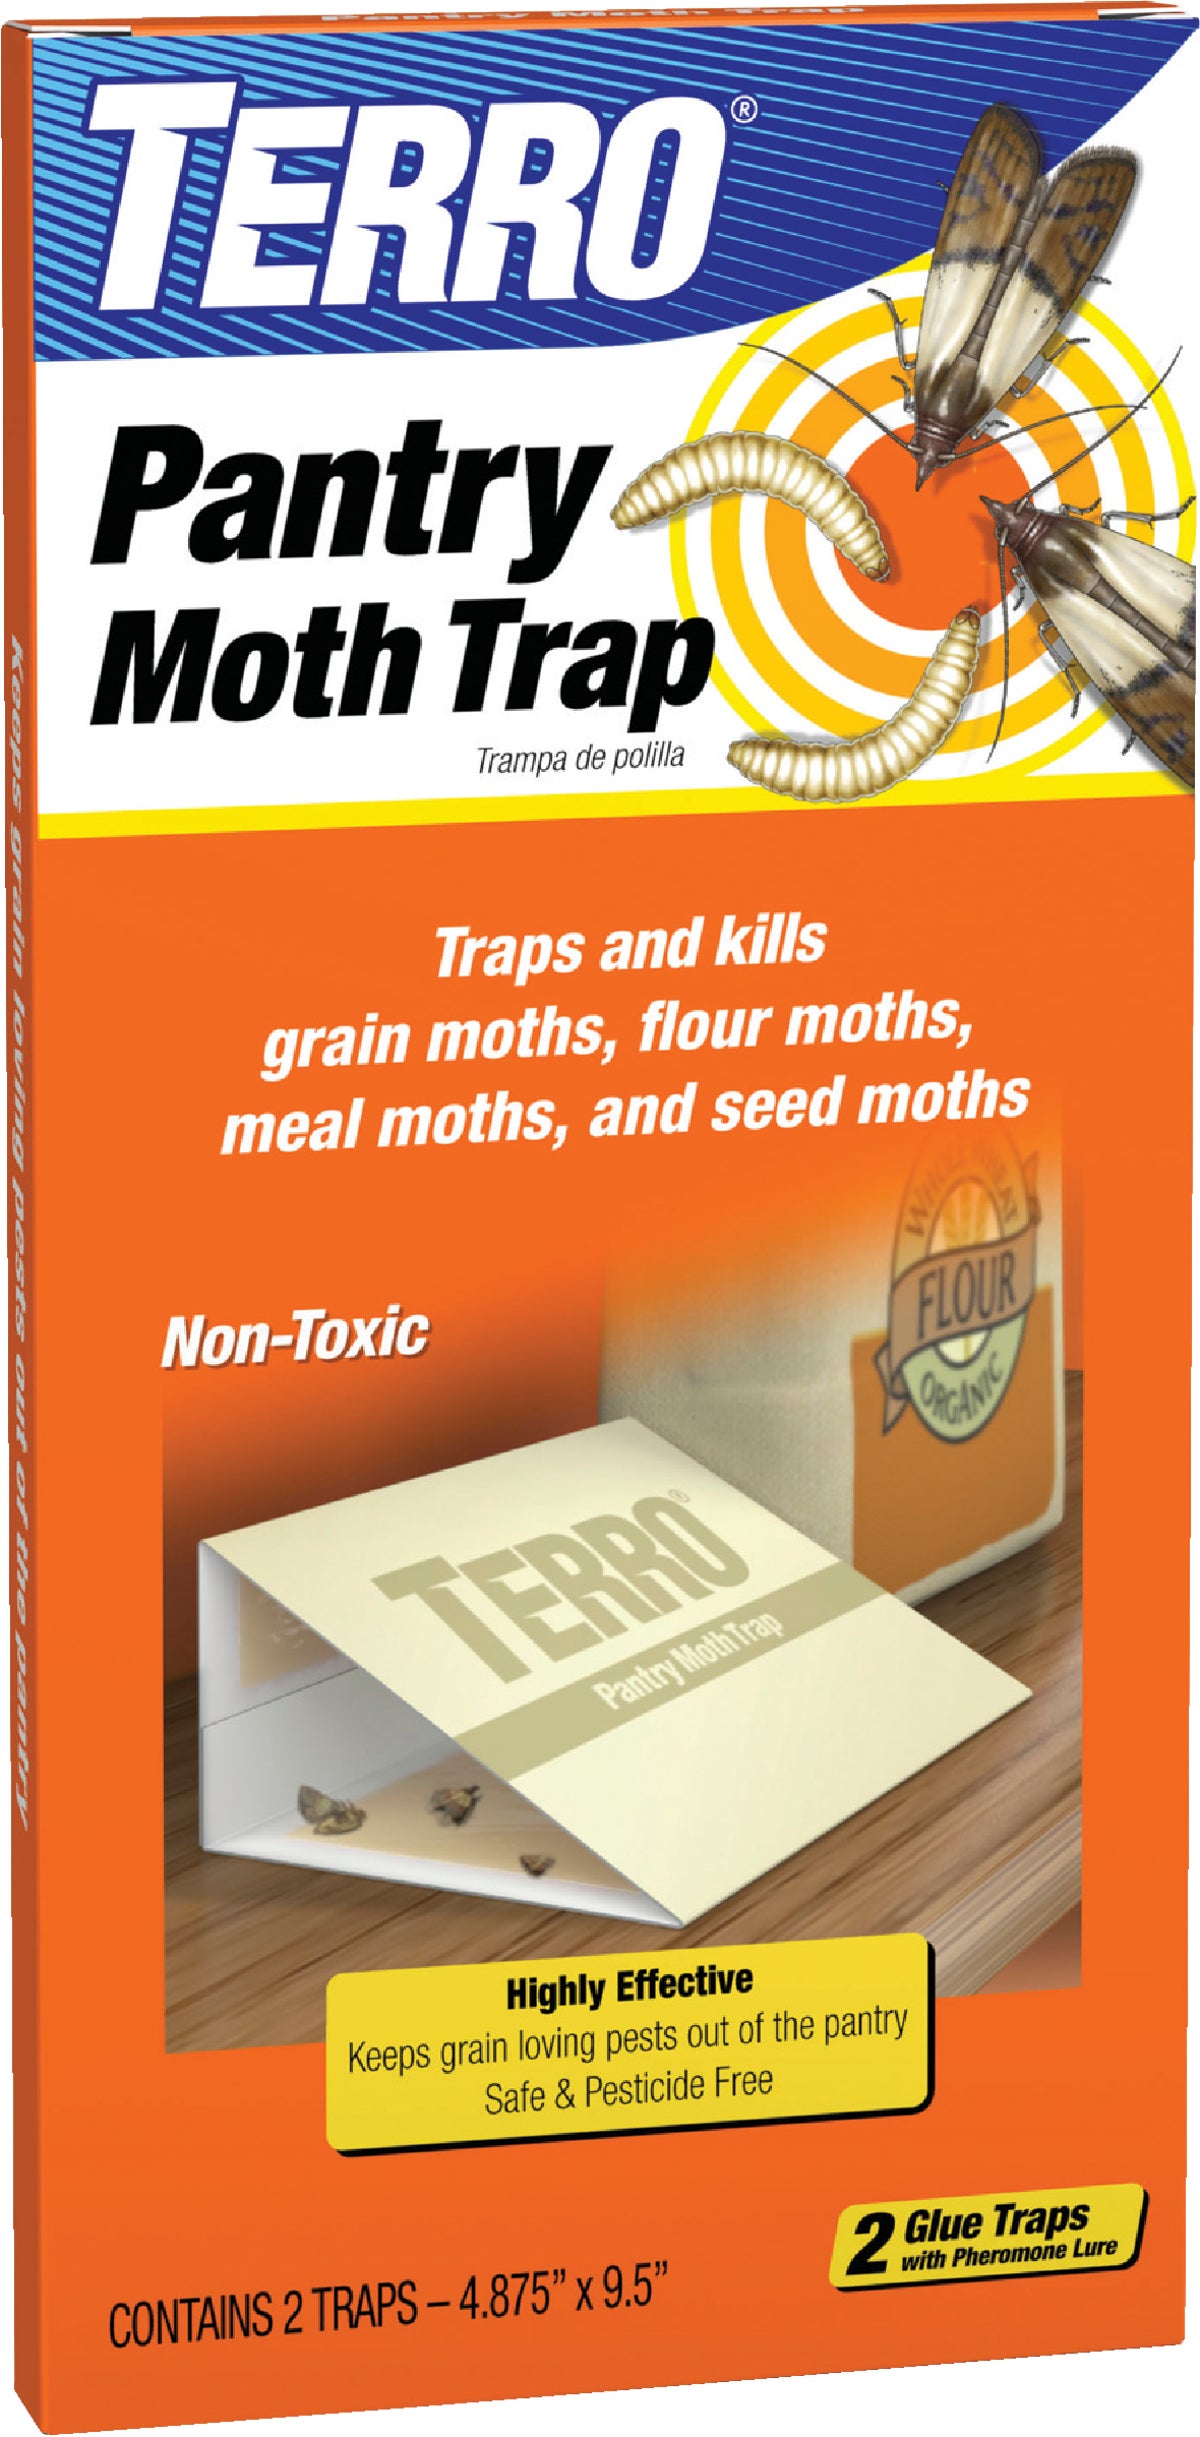 Enoz BioCare Flour & Pantry Moth Traps - Enoz